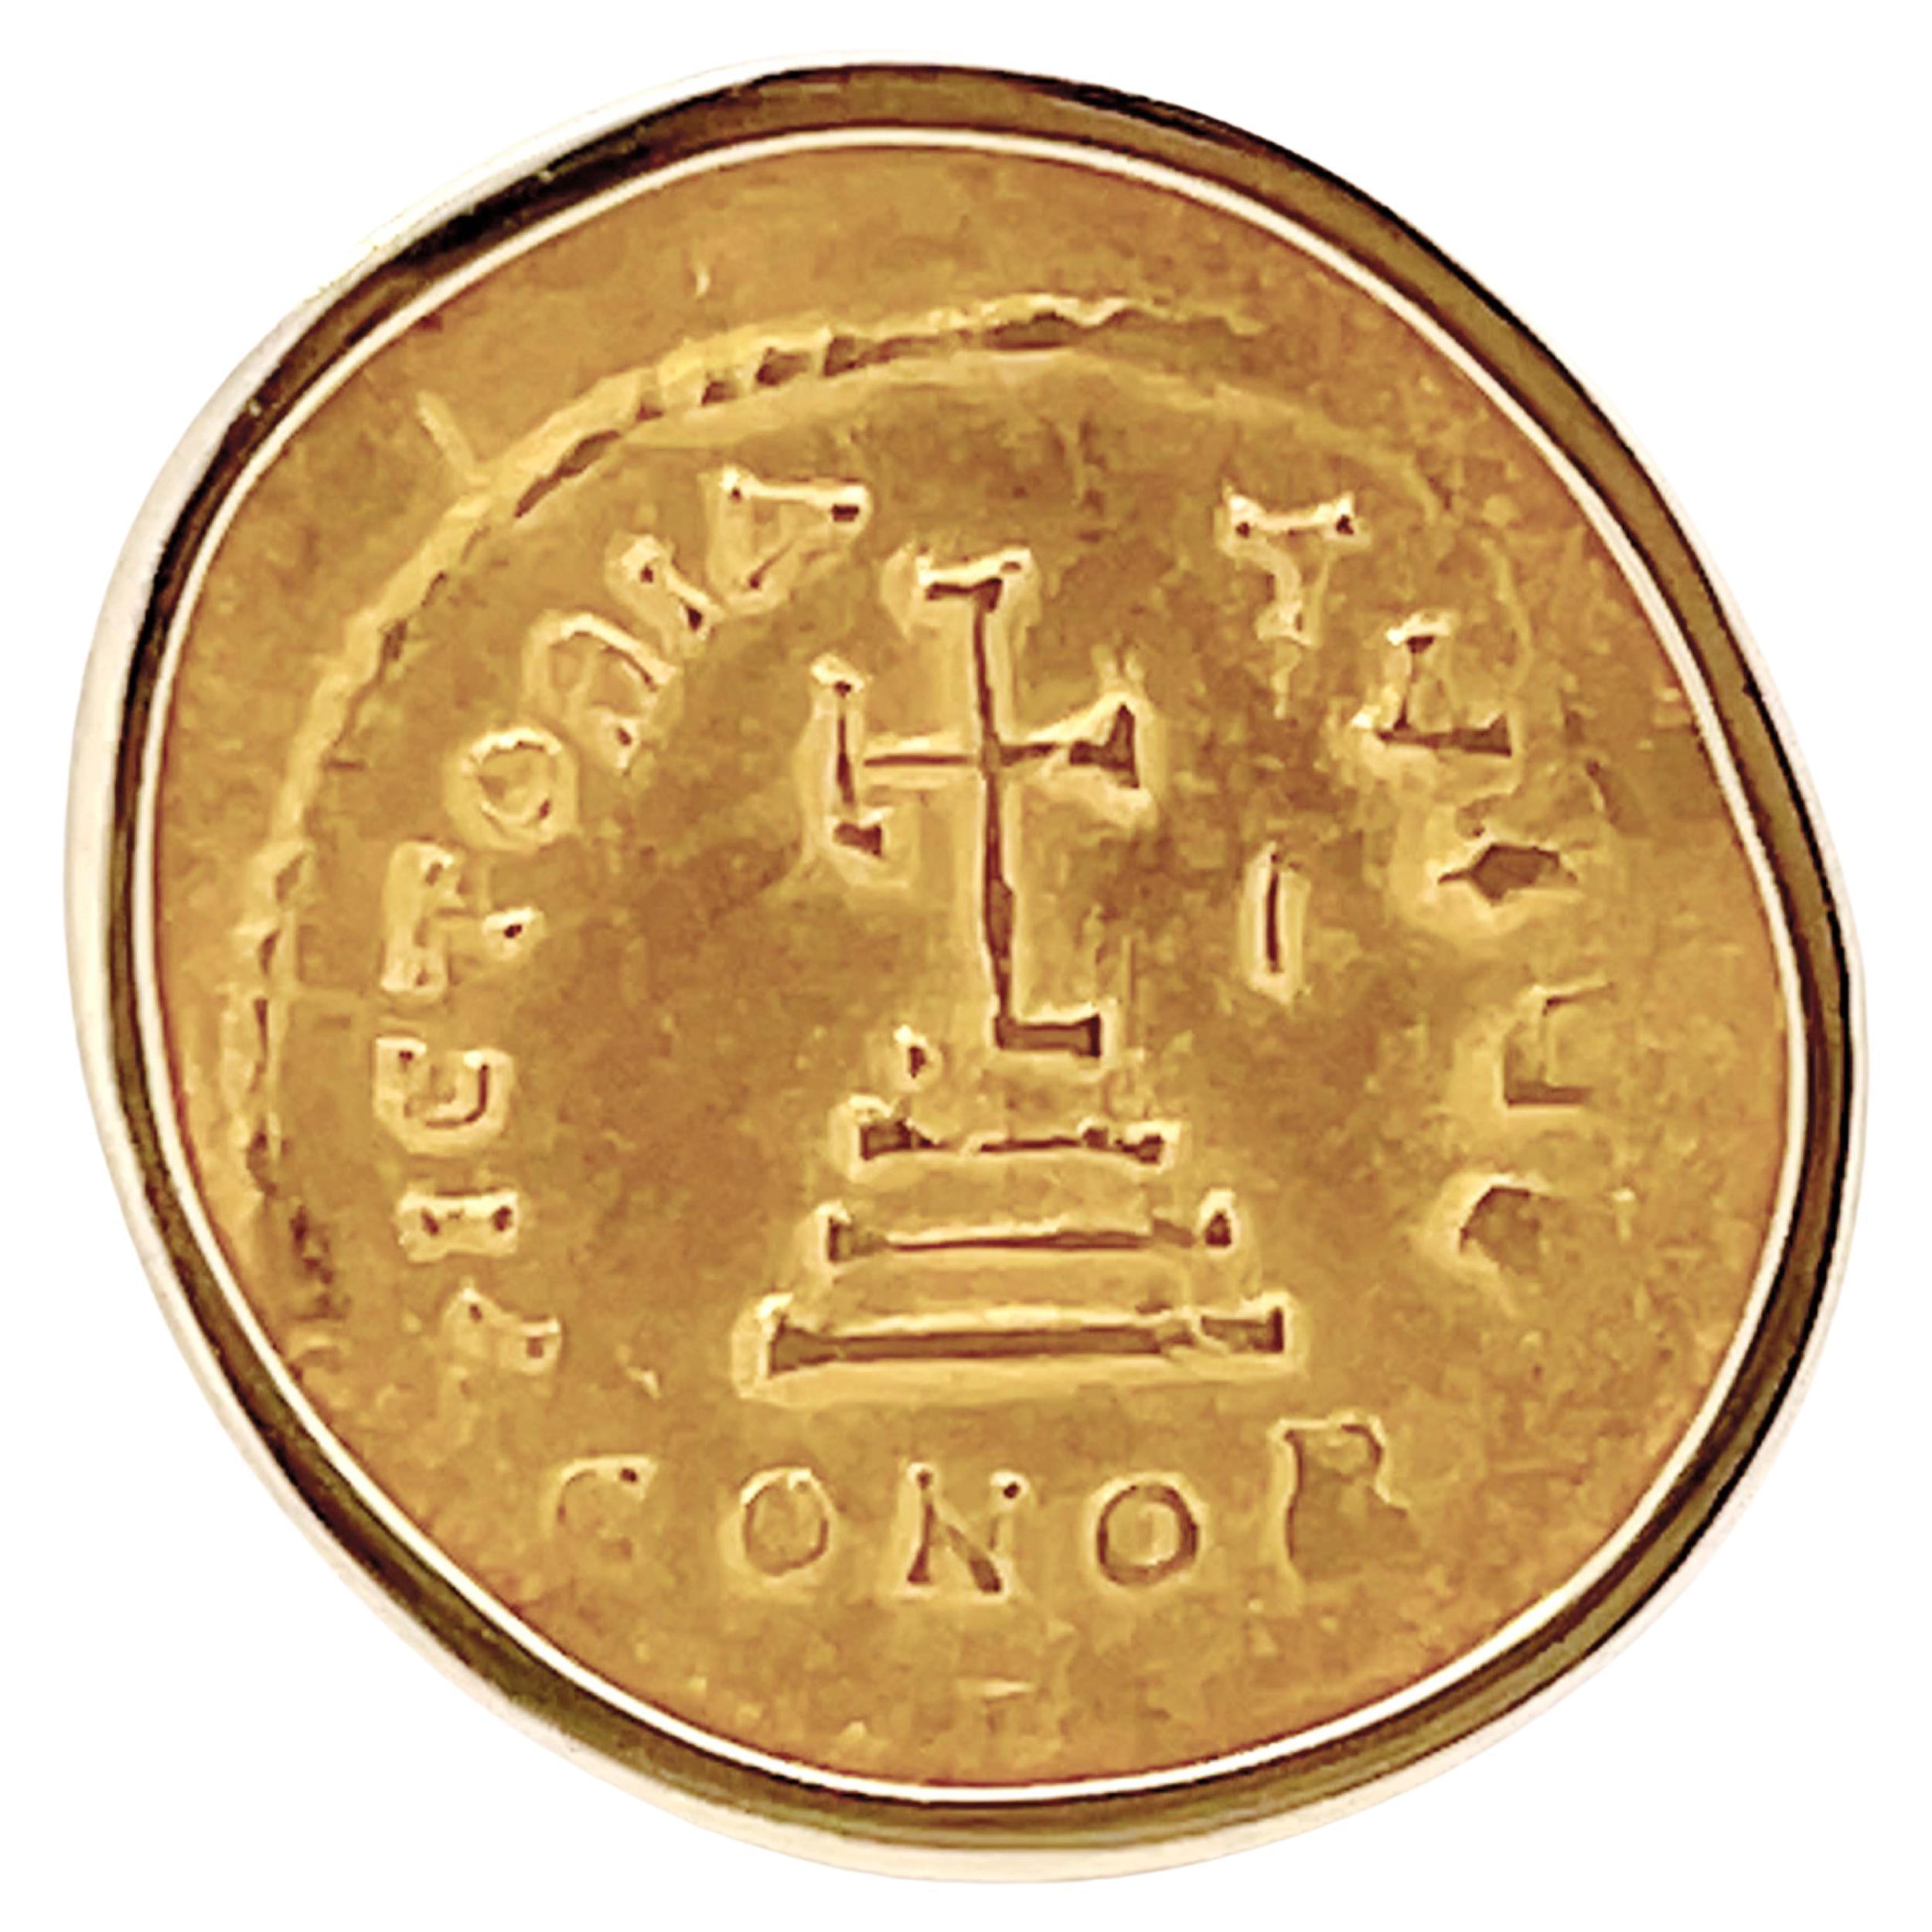 Jorge Adeler Heraclius Gold Coin Ring in 18Karat Yellow Gold For Sale